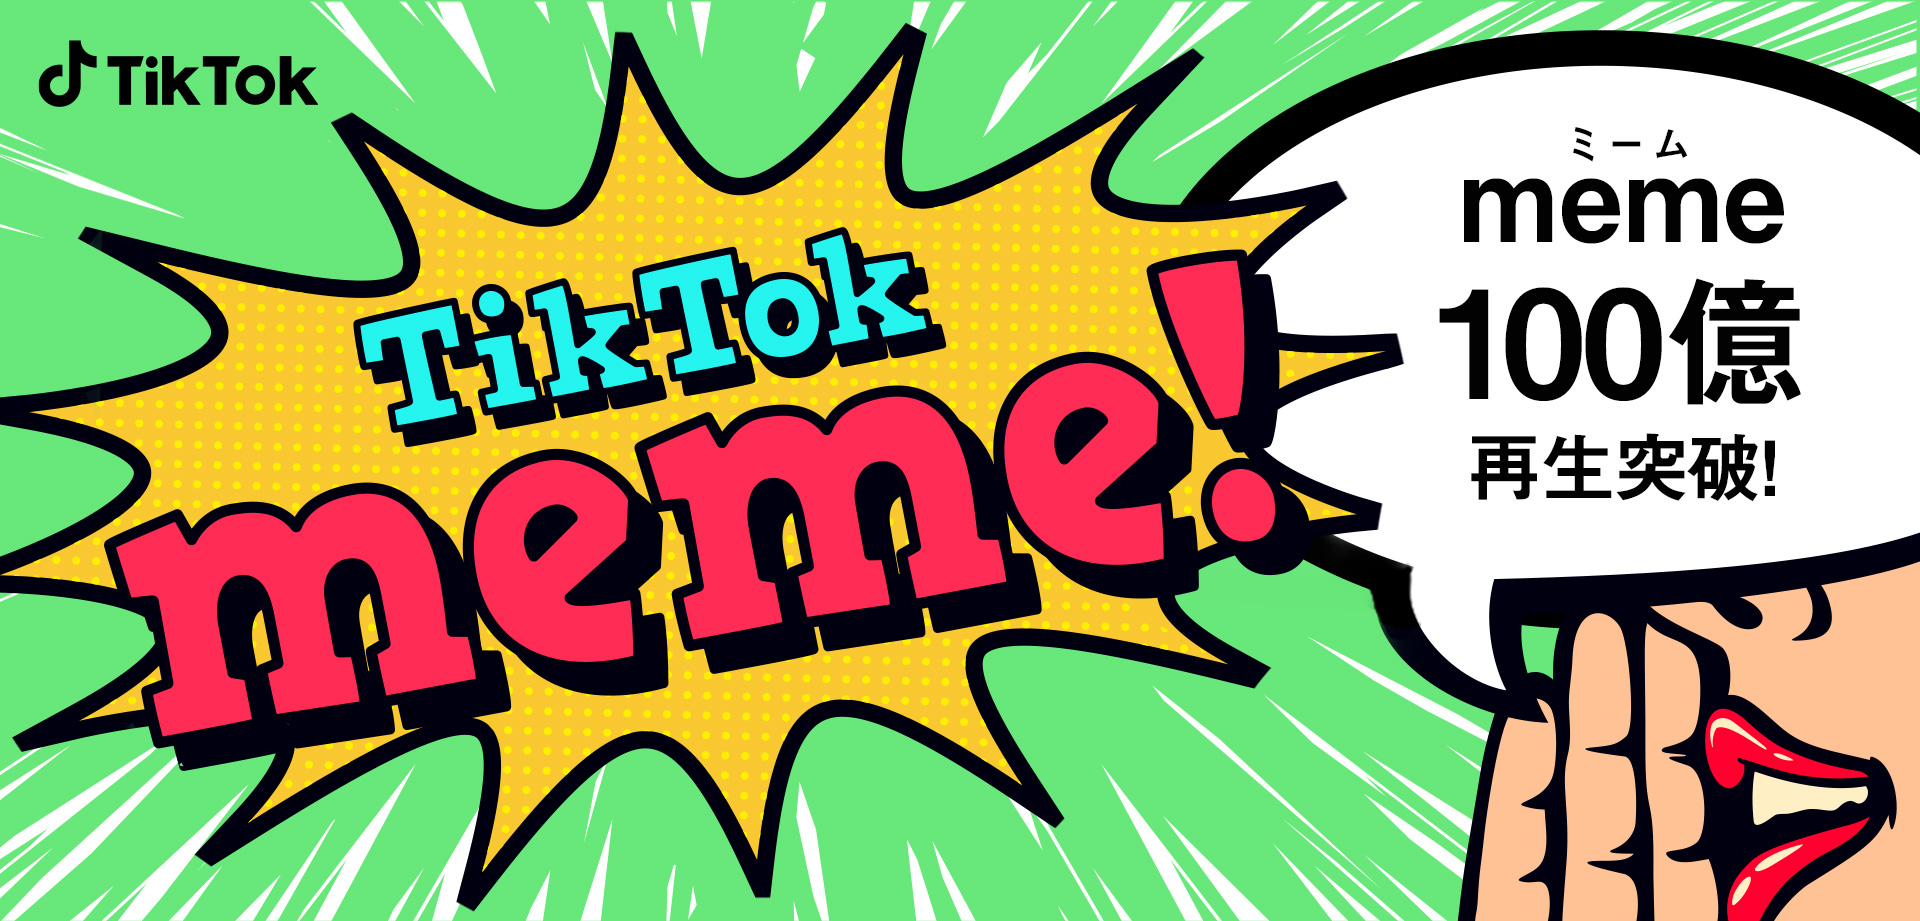 Tiktokにおけるmeme ミーム 動画の総再生数が 100億回突破 Bytedance株式会社のプレスリリース